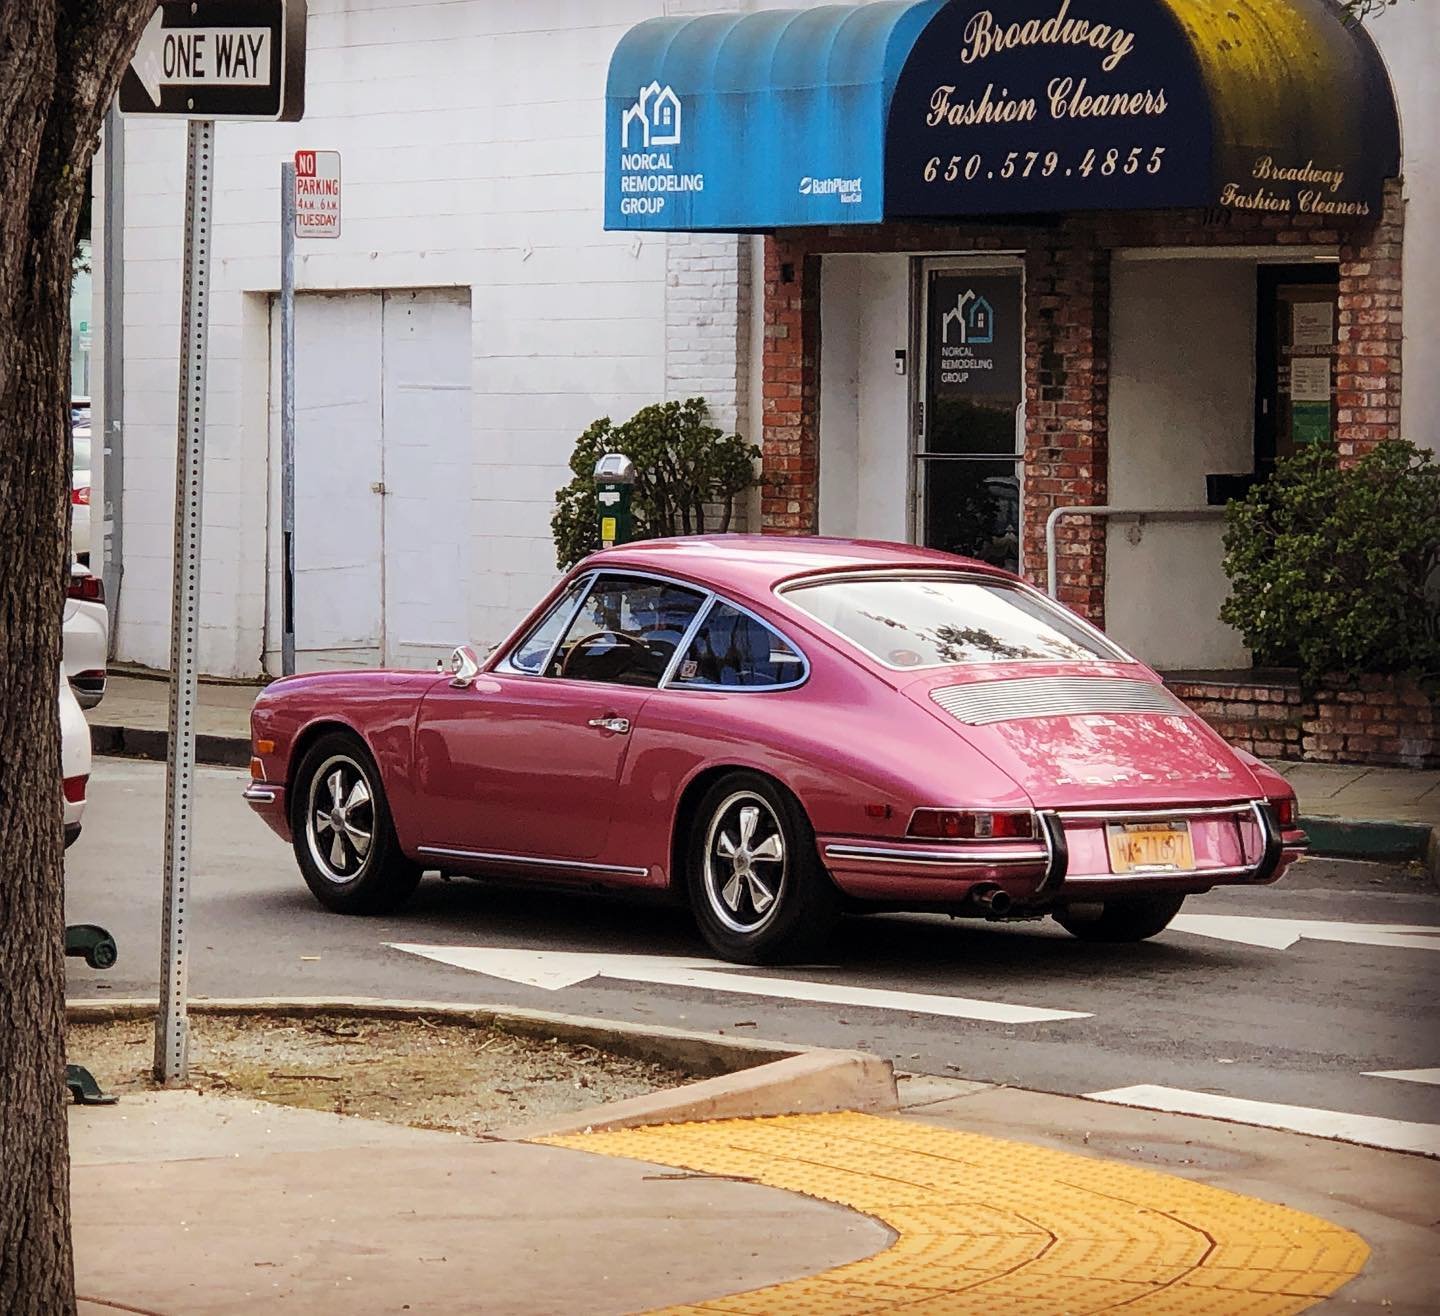 Classic Porsche in Burlingame. @porsche @porscheusa @porscheclubofamerica #porschepix #porschelovers #porschelifestyle